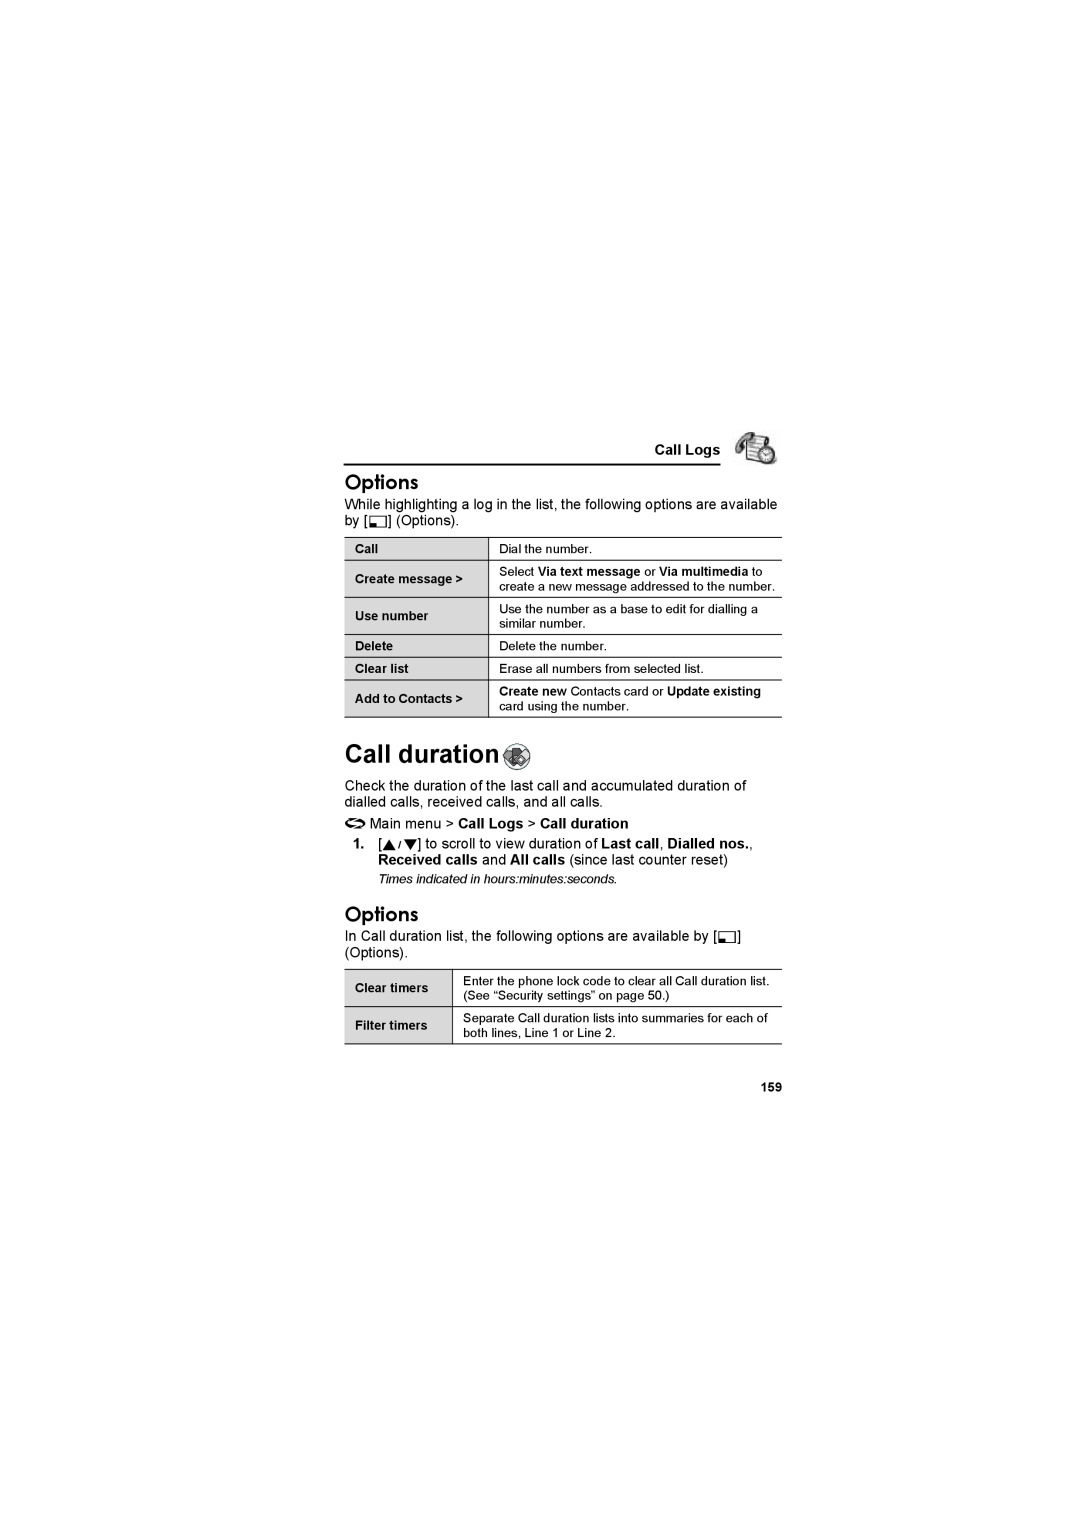 Panasonic EB-X800 manual Options, z Main menu Call Logs Call duration 